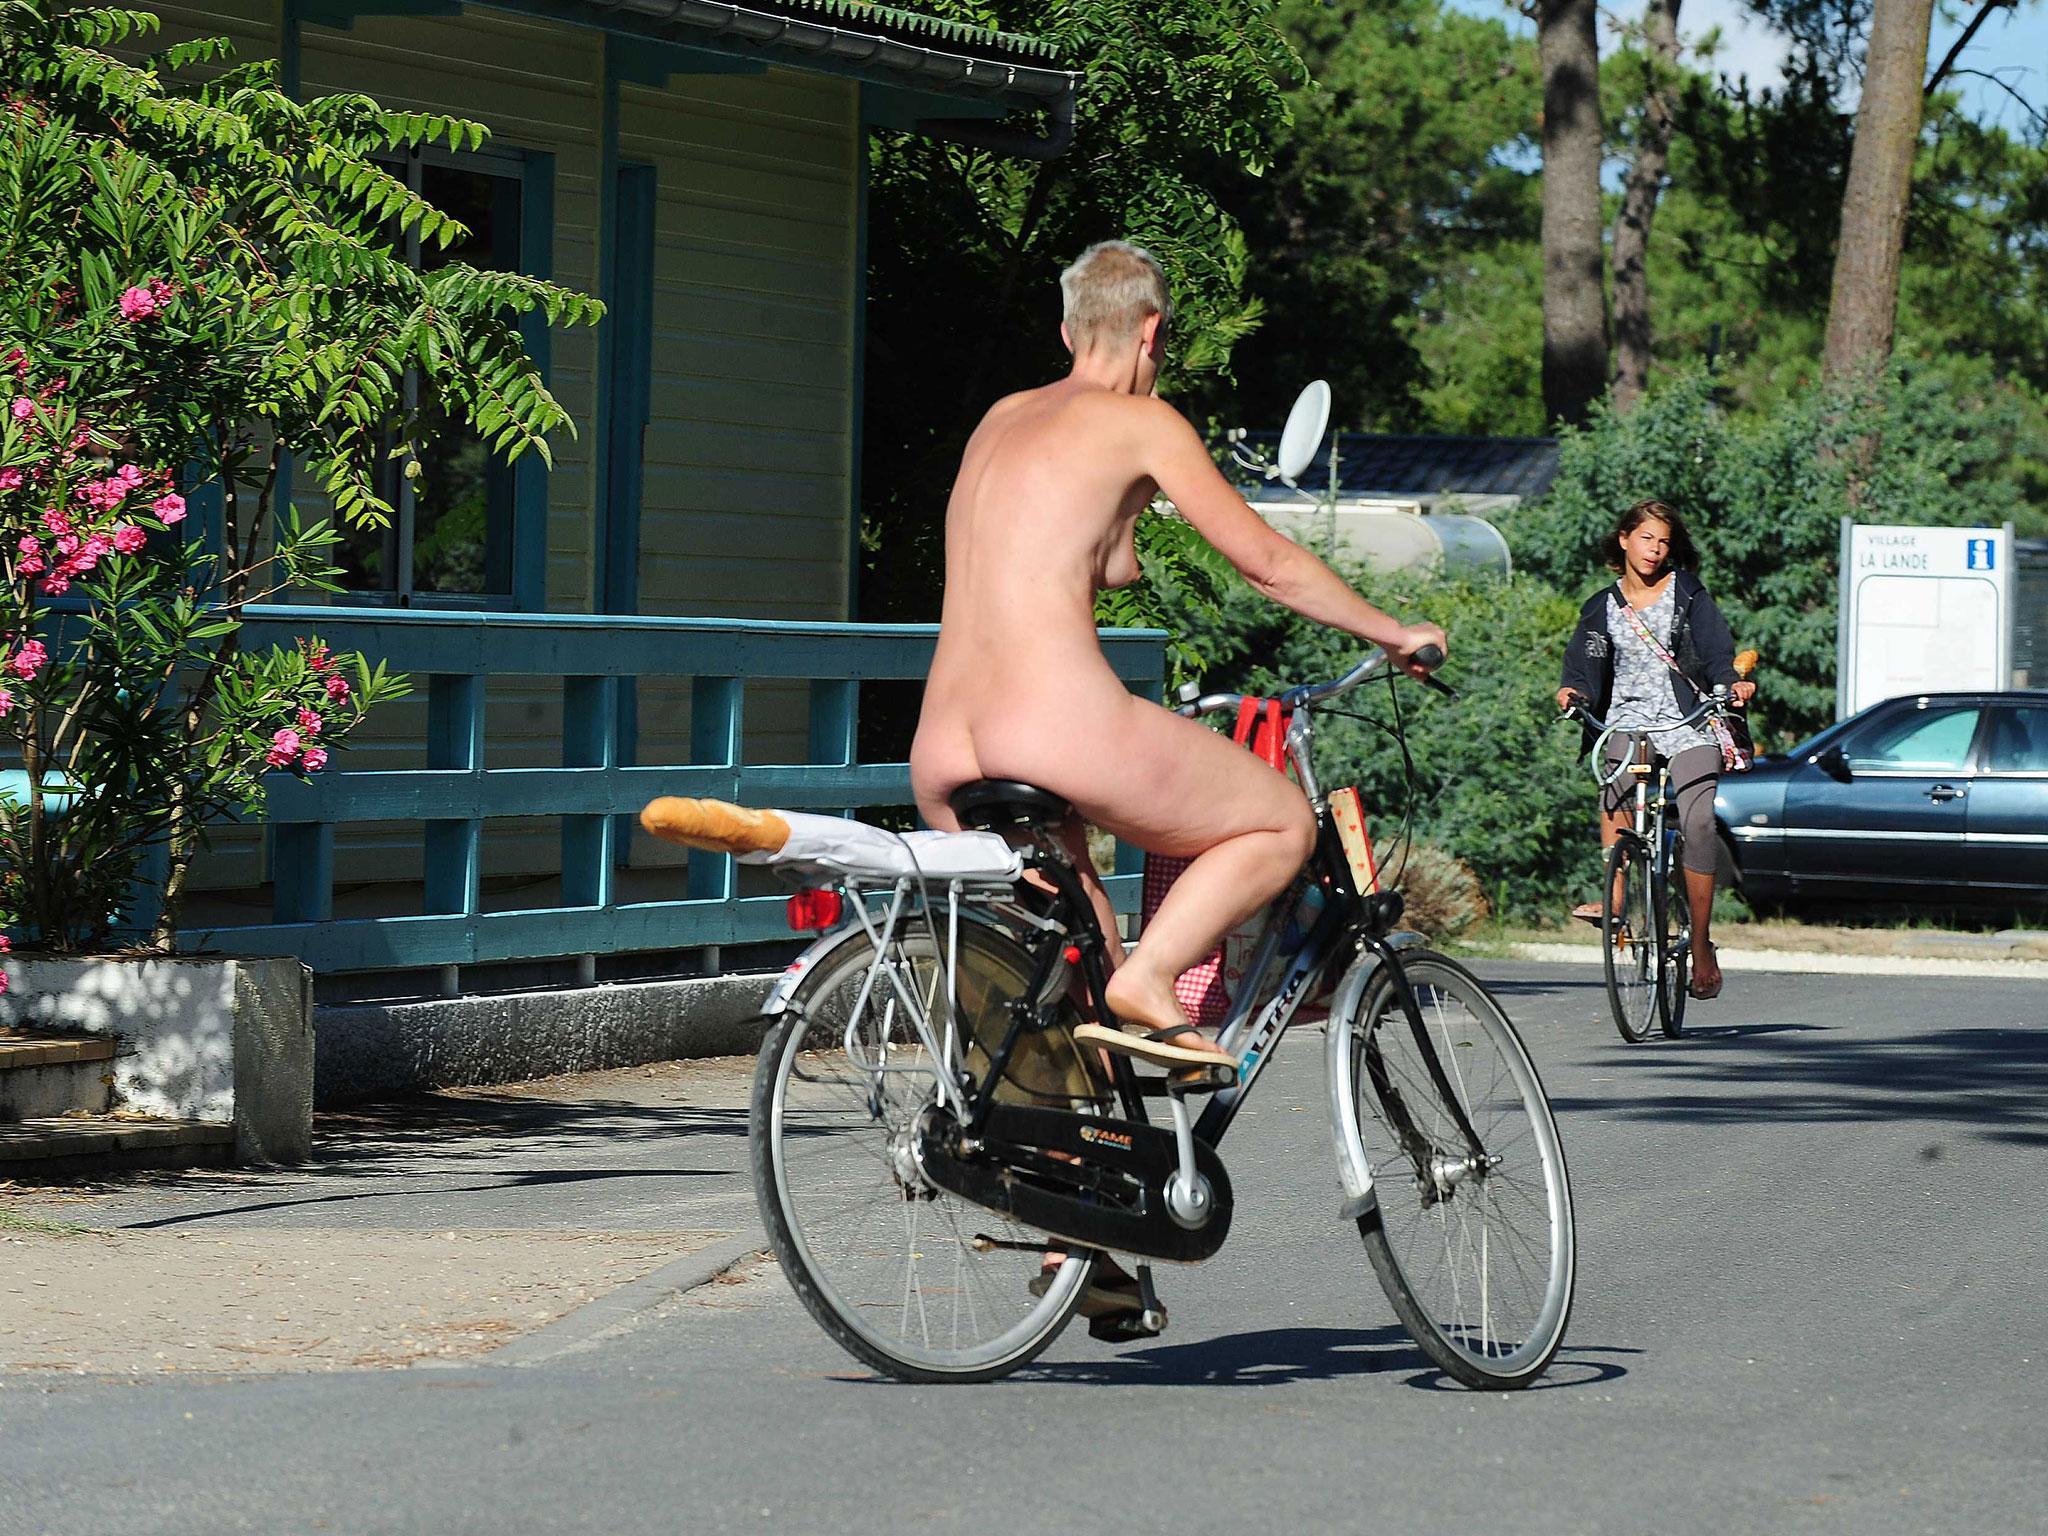 French Nude Beach Voyager - Bois de Vincennes park in Paris is launching a nudist area ...